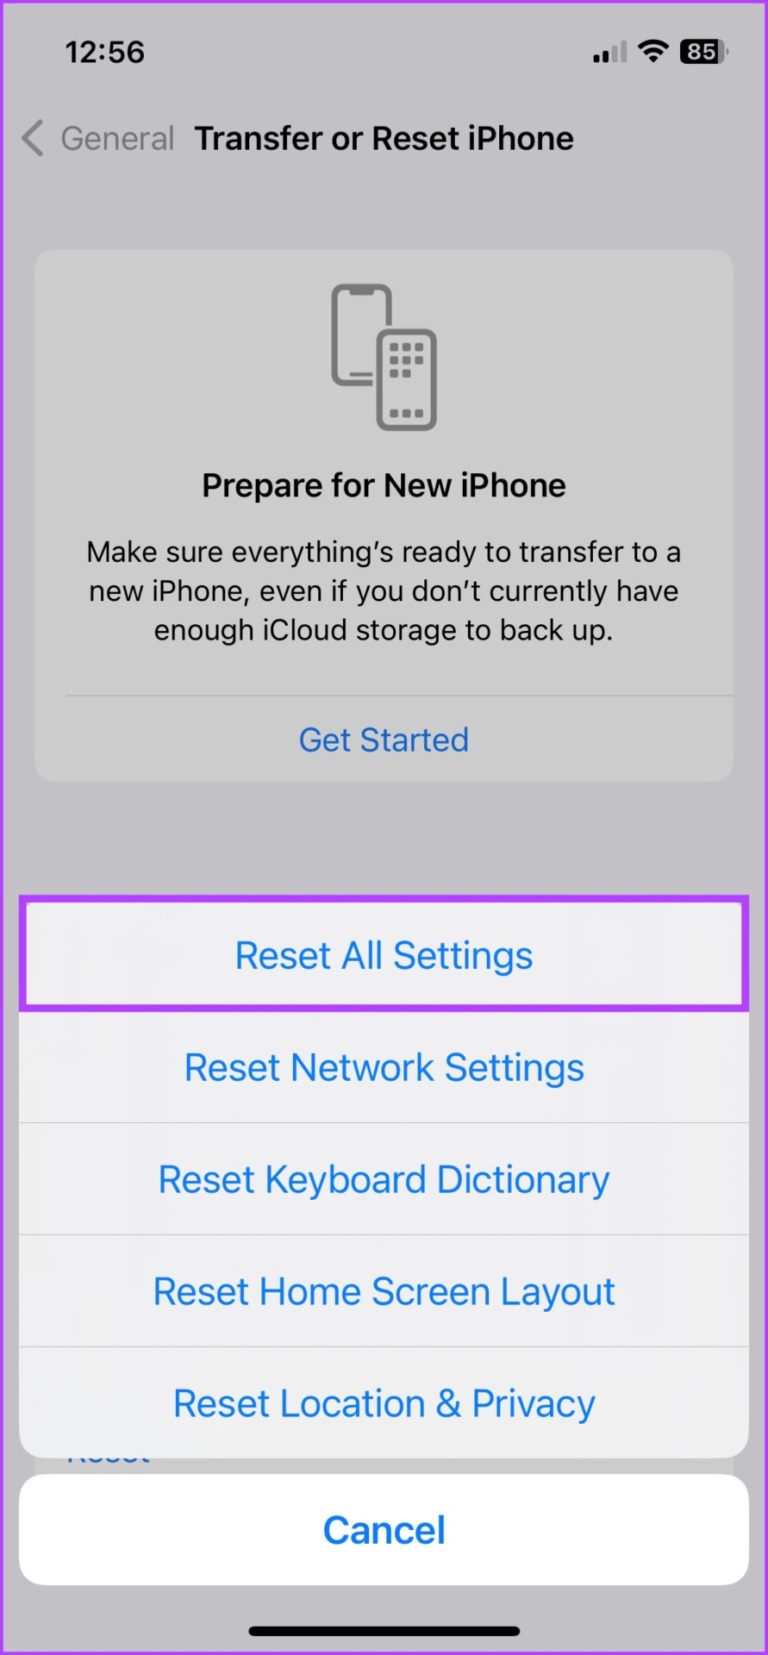 7 Ways to Fix iPhone Calendar Search Not Working Guiding Tech